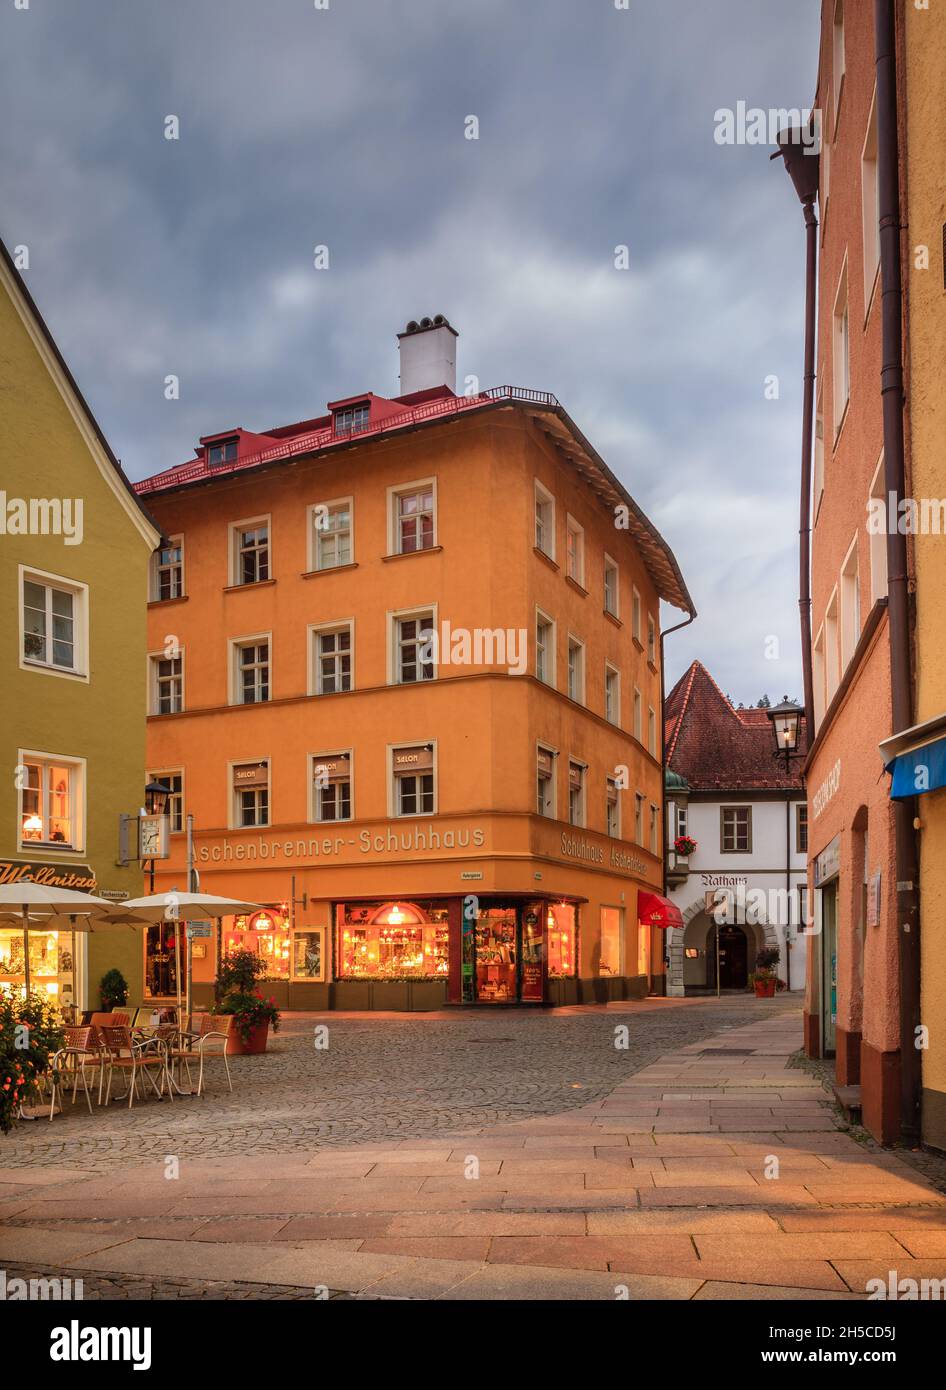 Fussen, Germany, September 27, 2015: Evening street scene in the city of Fussen, Germany Stock Photo